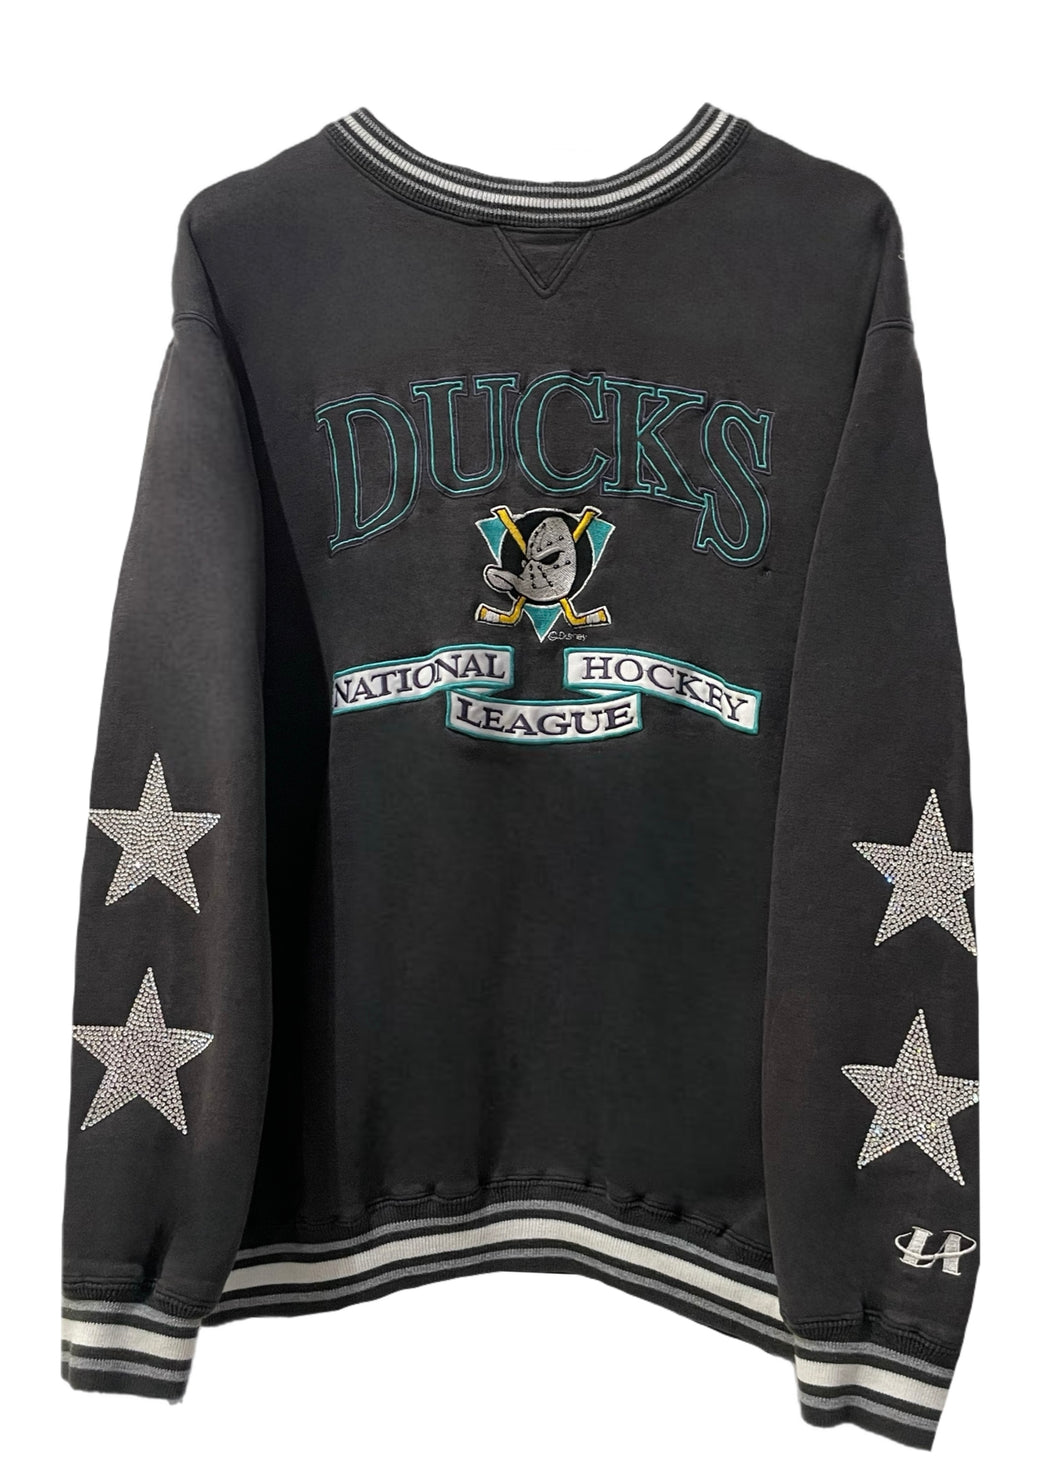 Anaheim Ducks, Hockey One of a KIND Vintage Mighty Ducks Sweatshirt with Crystal Star Design.